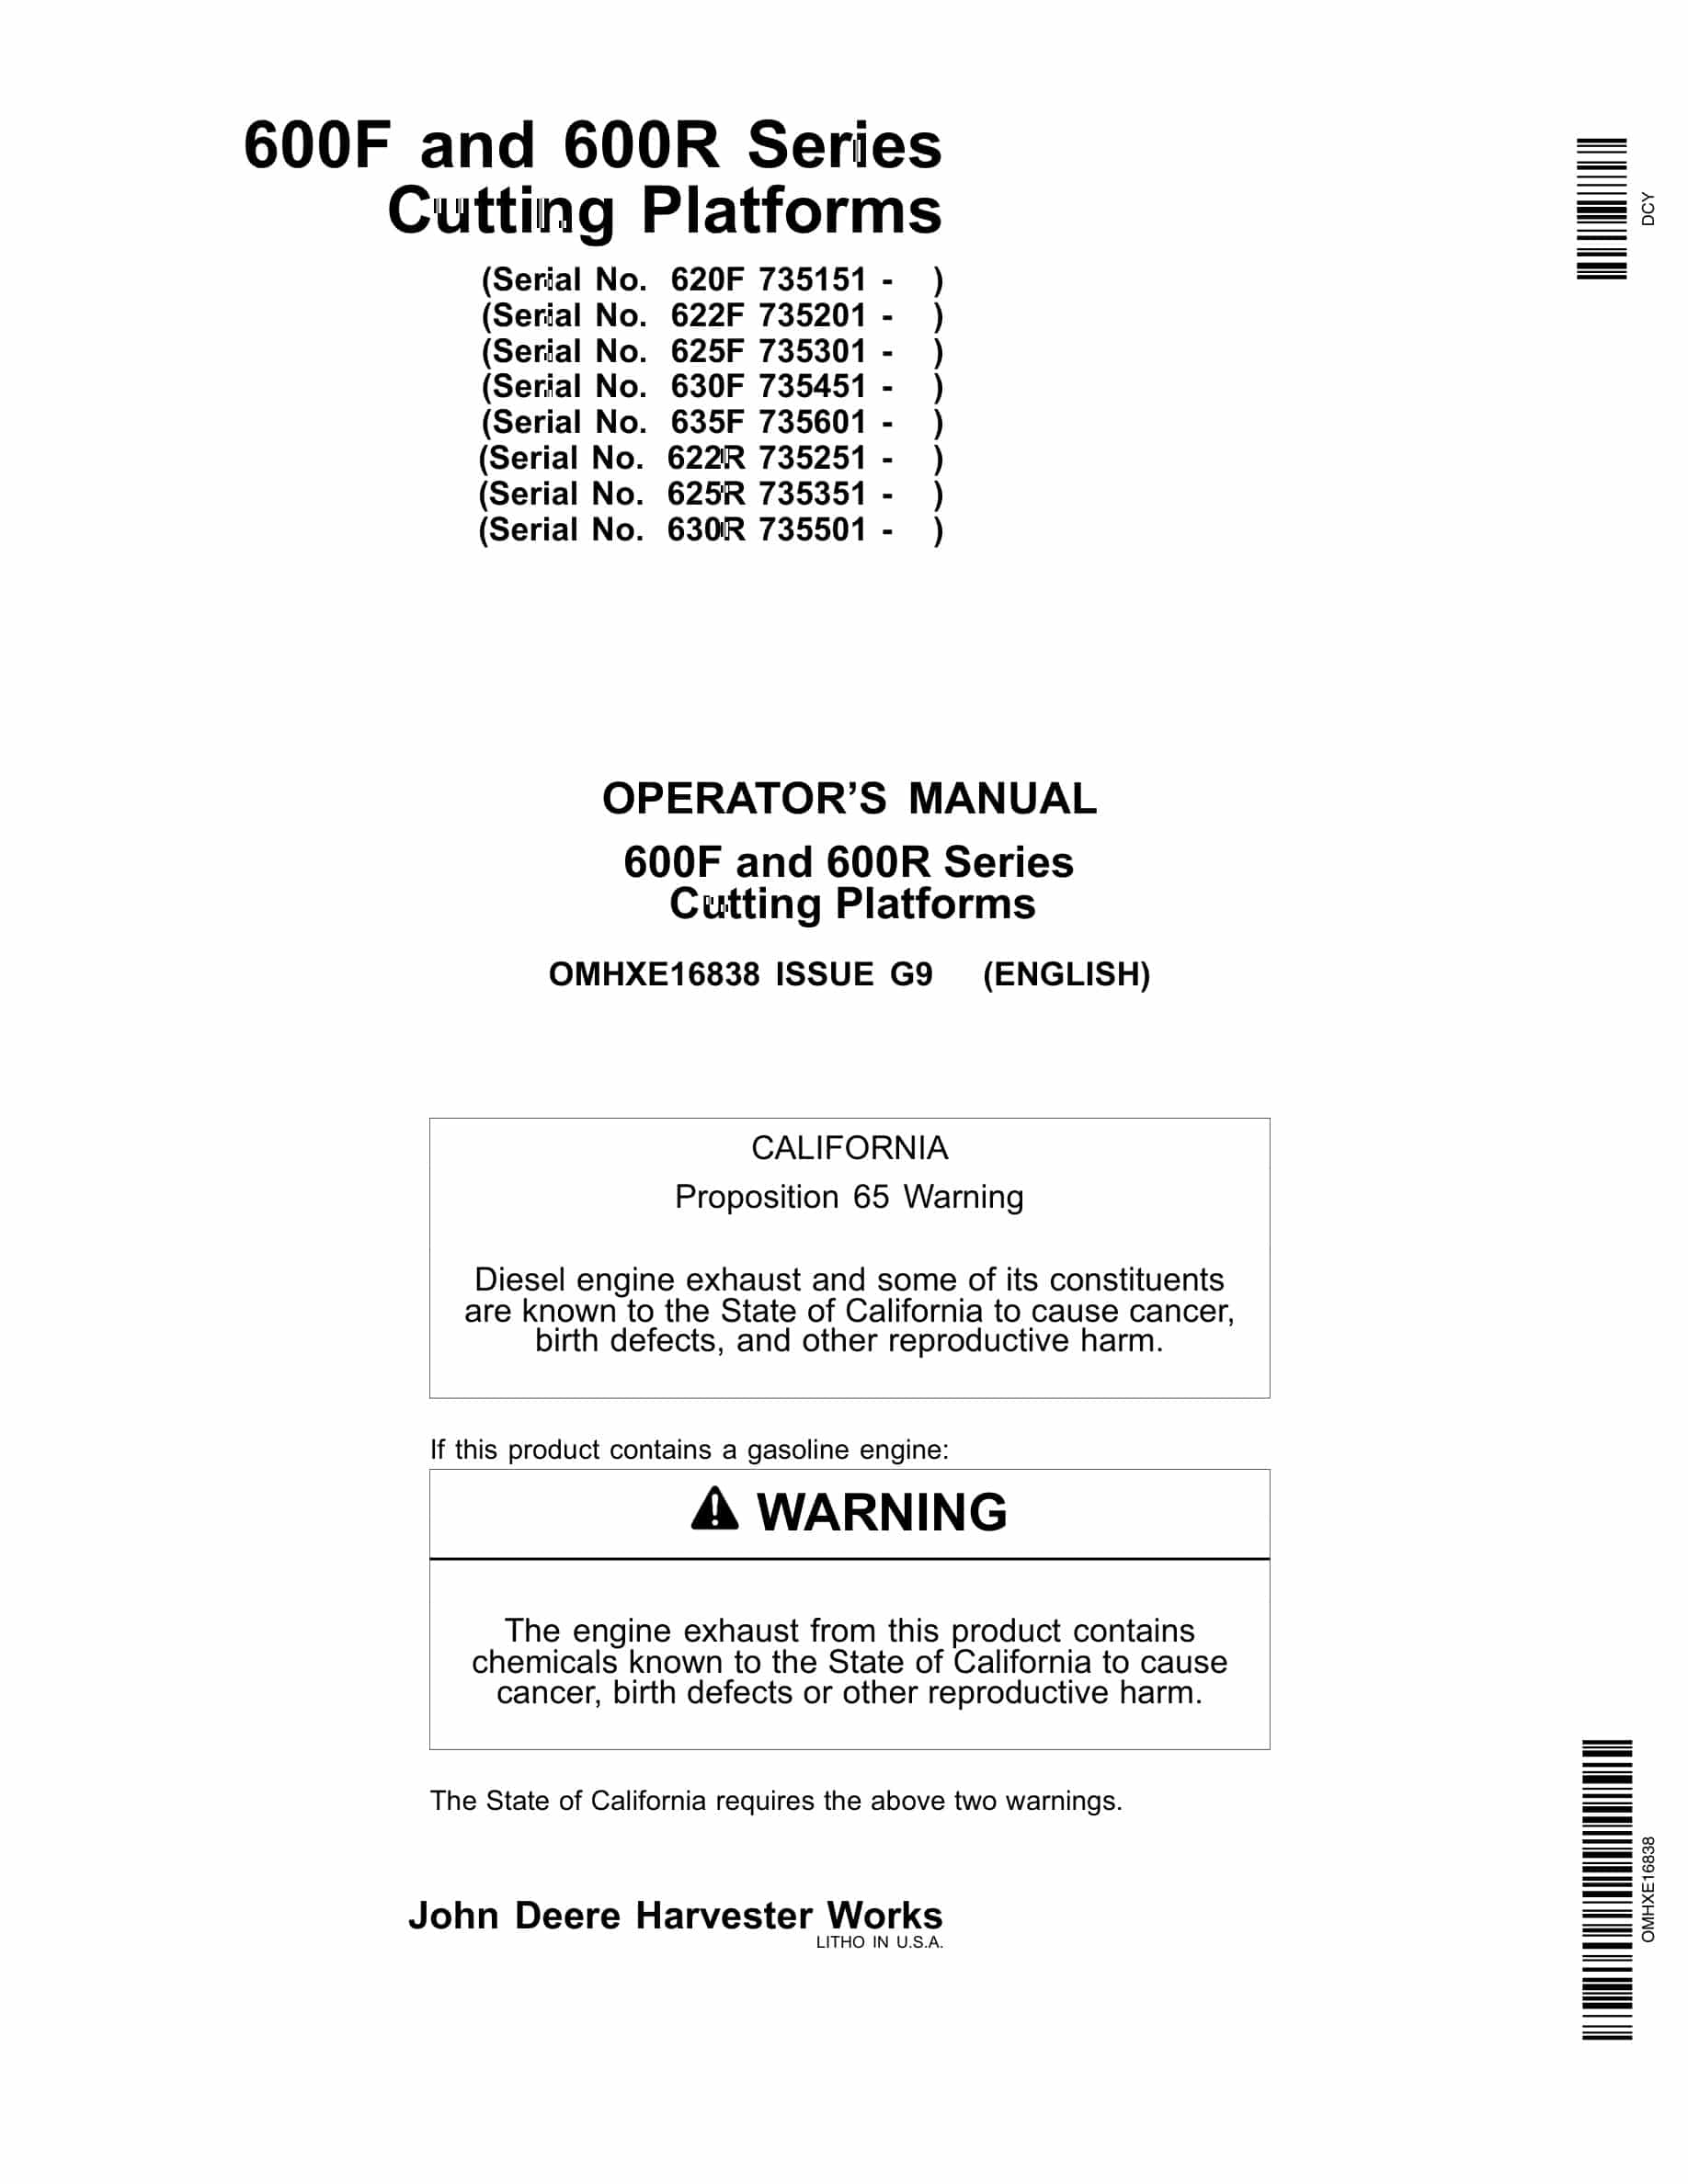 John Deere 600 F and 600 R Series Cutting Platforms Operator Manual OMHXE16838-1